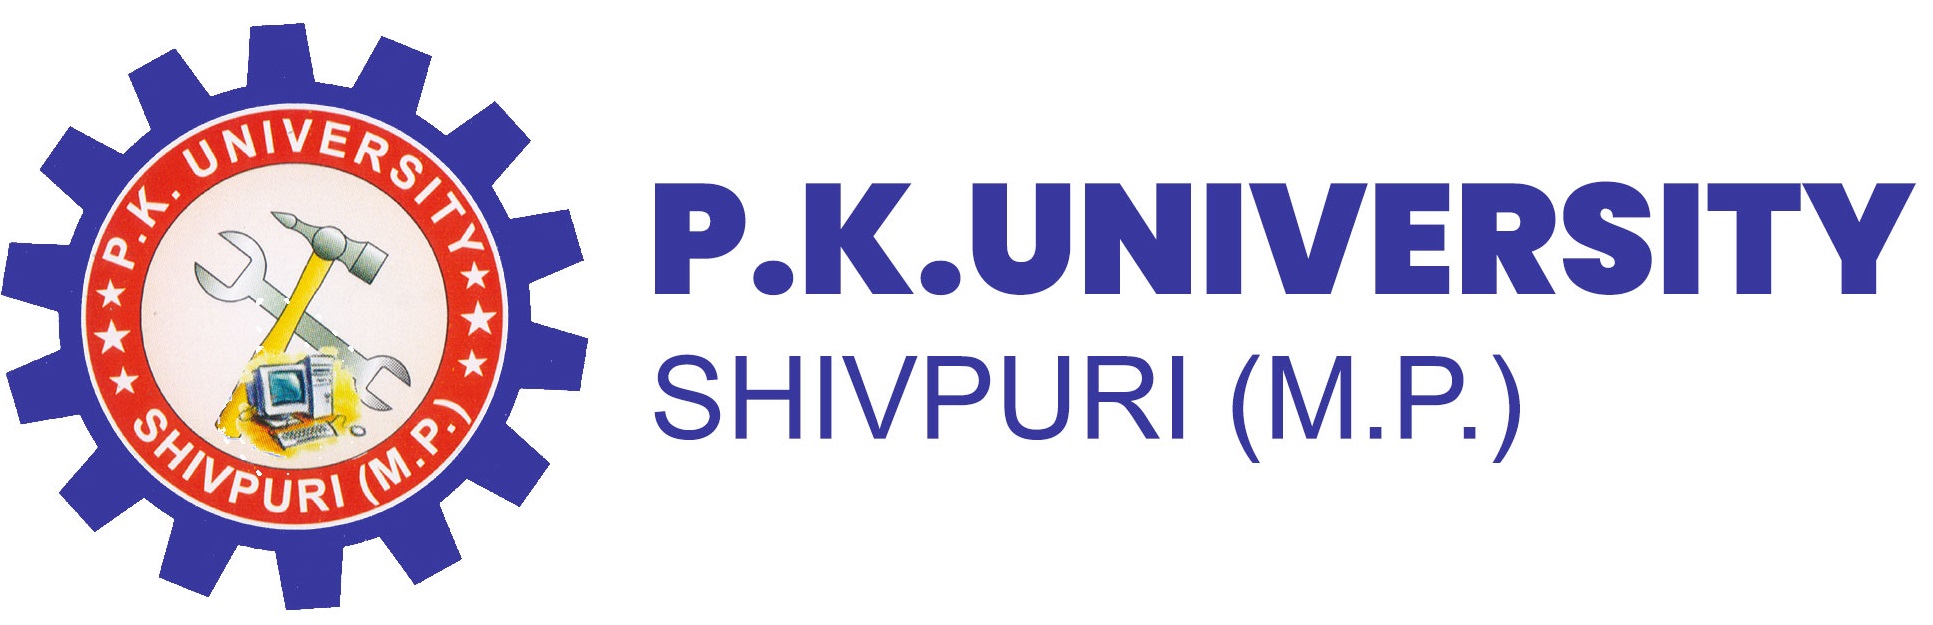 PK University, 